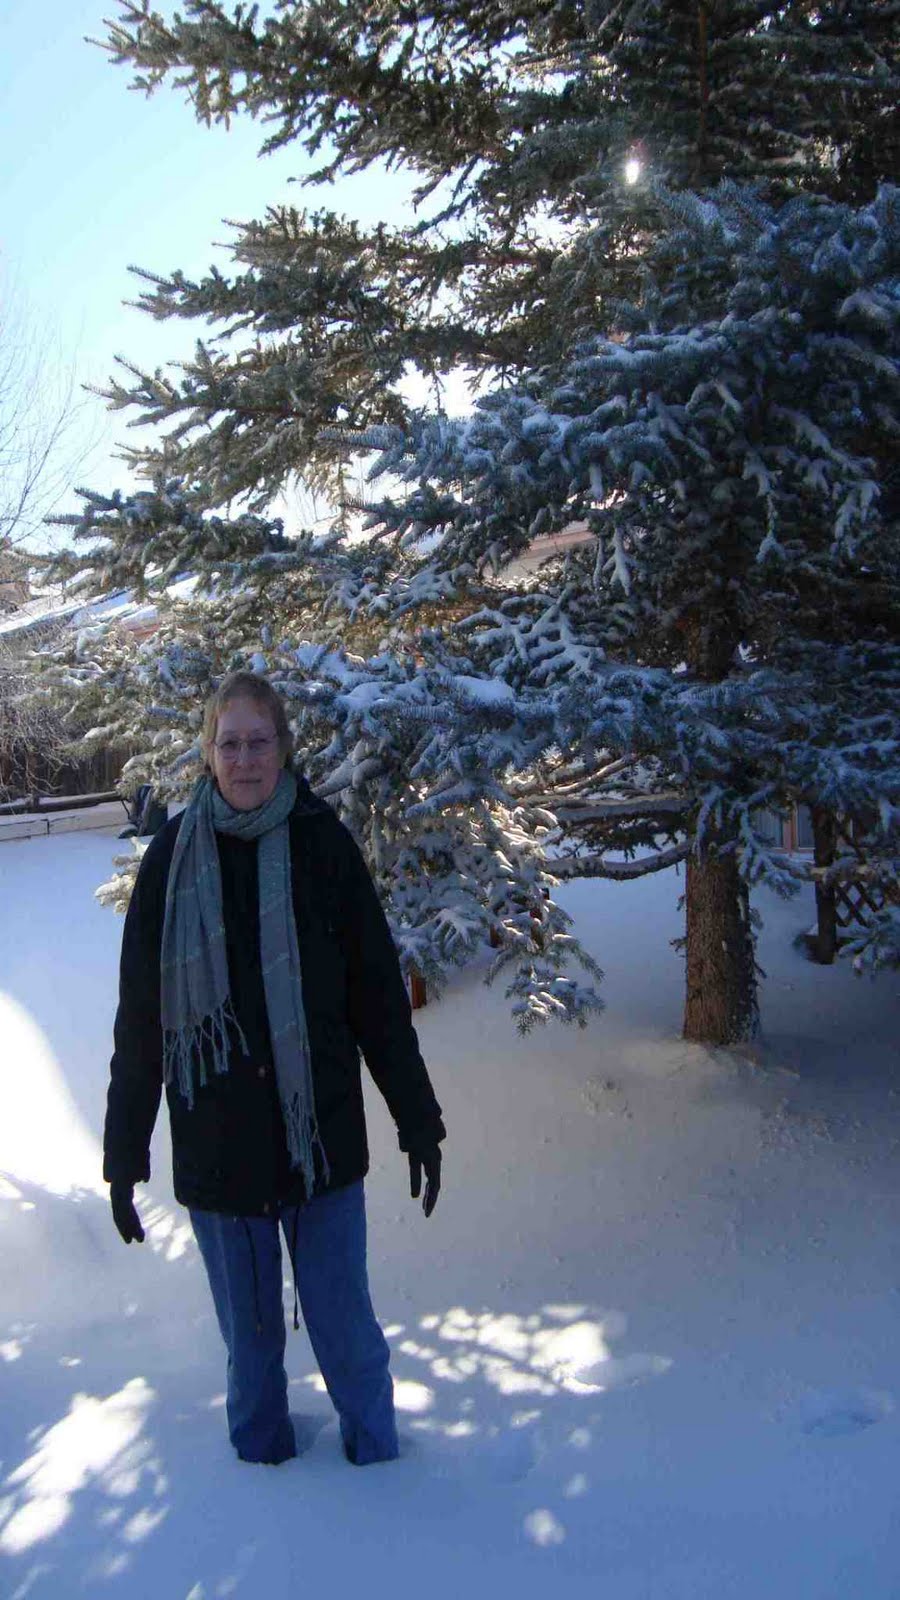 [Peggy+in+snow+backyard.jpg]